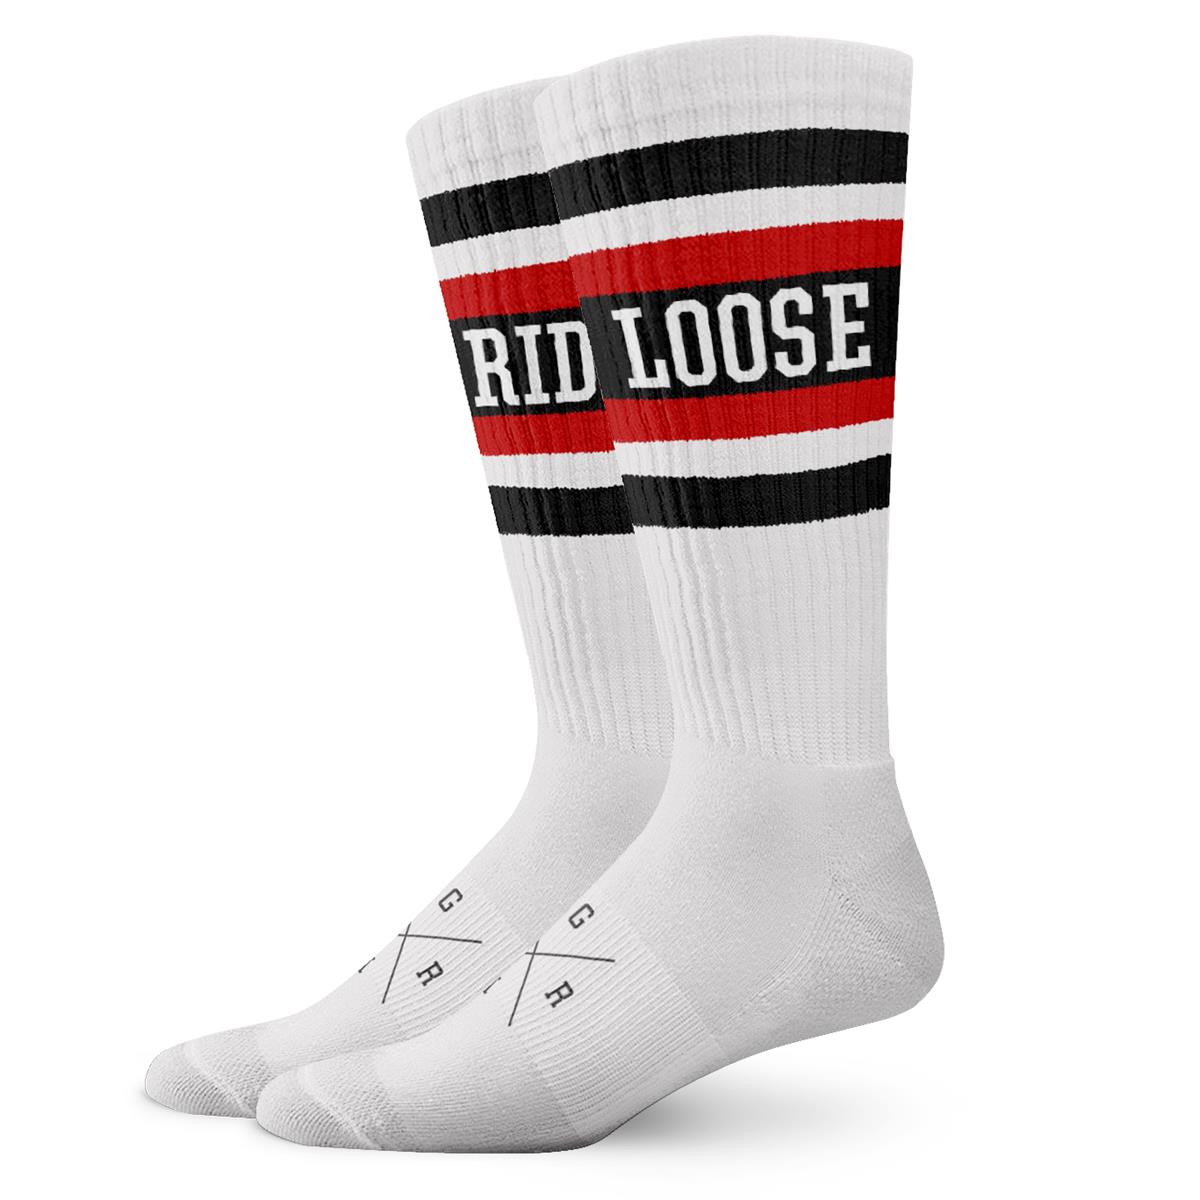 Loose Riders Socken